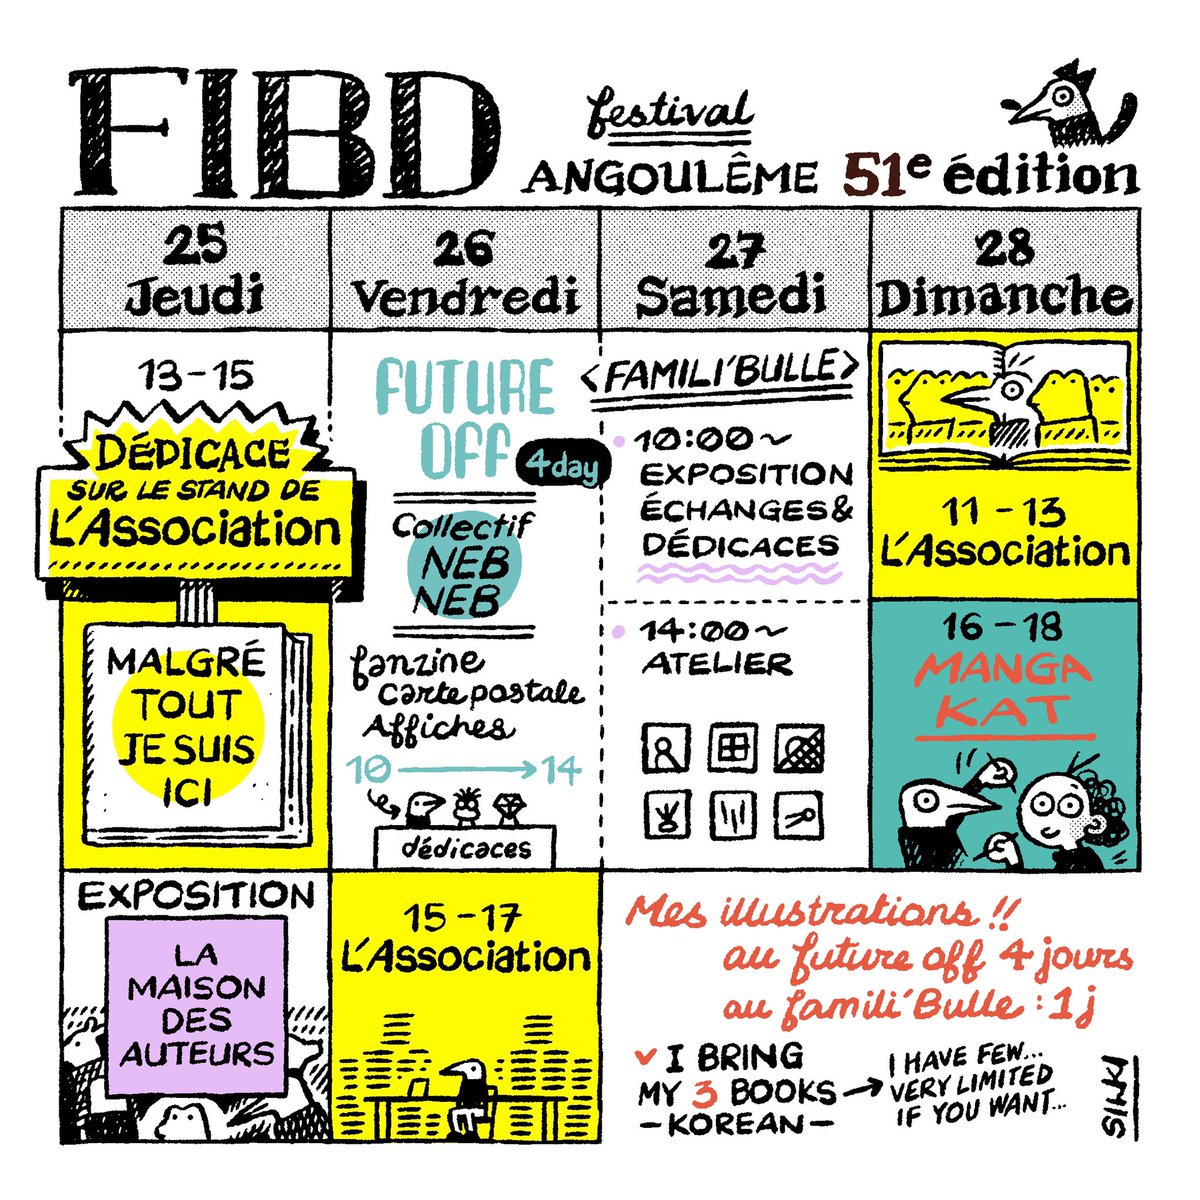 !! Programme de Silki au #FIBD !!
2024 앙굴렘 만화 축제 프로그램 입니다.
2개의 전시회, 사인회, 스탠드, 워크숍이 있습니다. 이번에는 많은 동료들과 함께 합니다! 많이 놀러 오세요~~